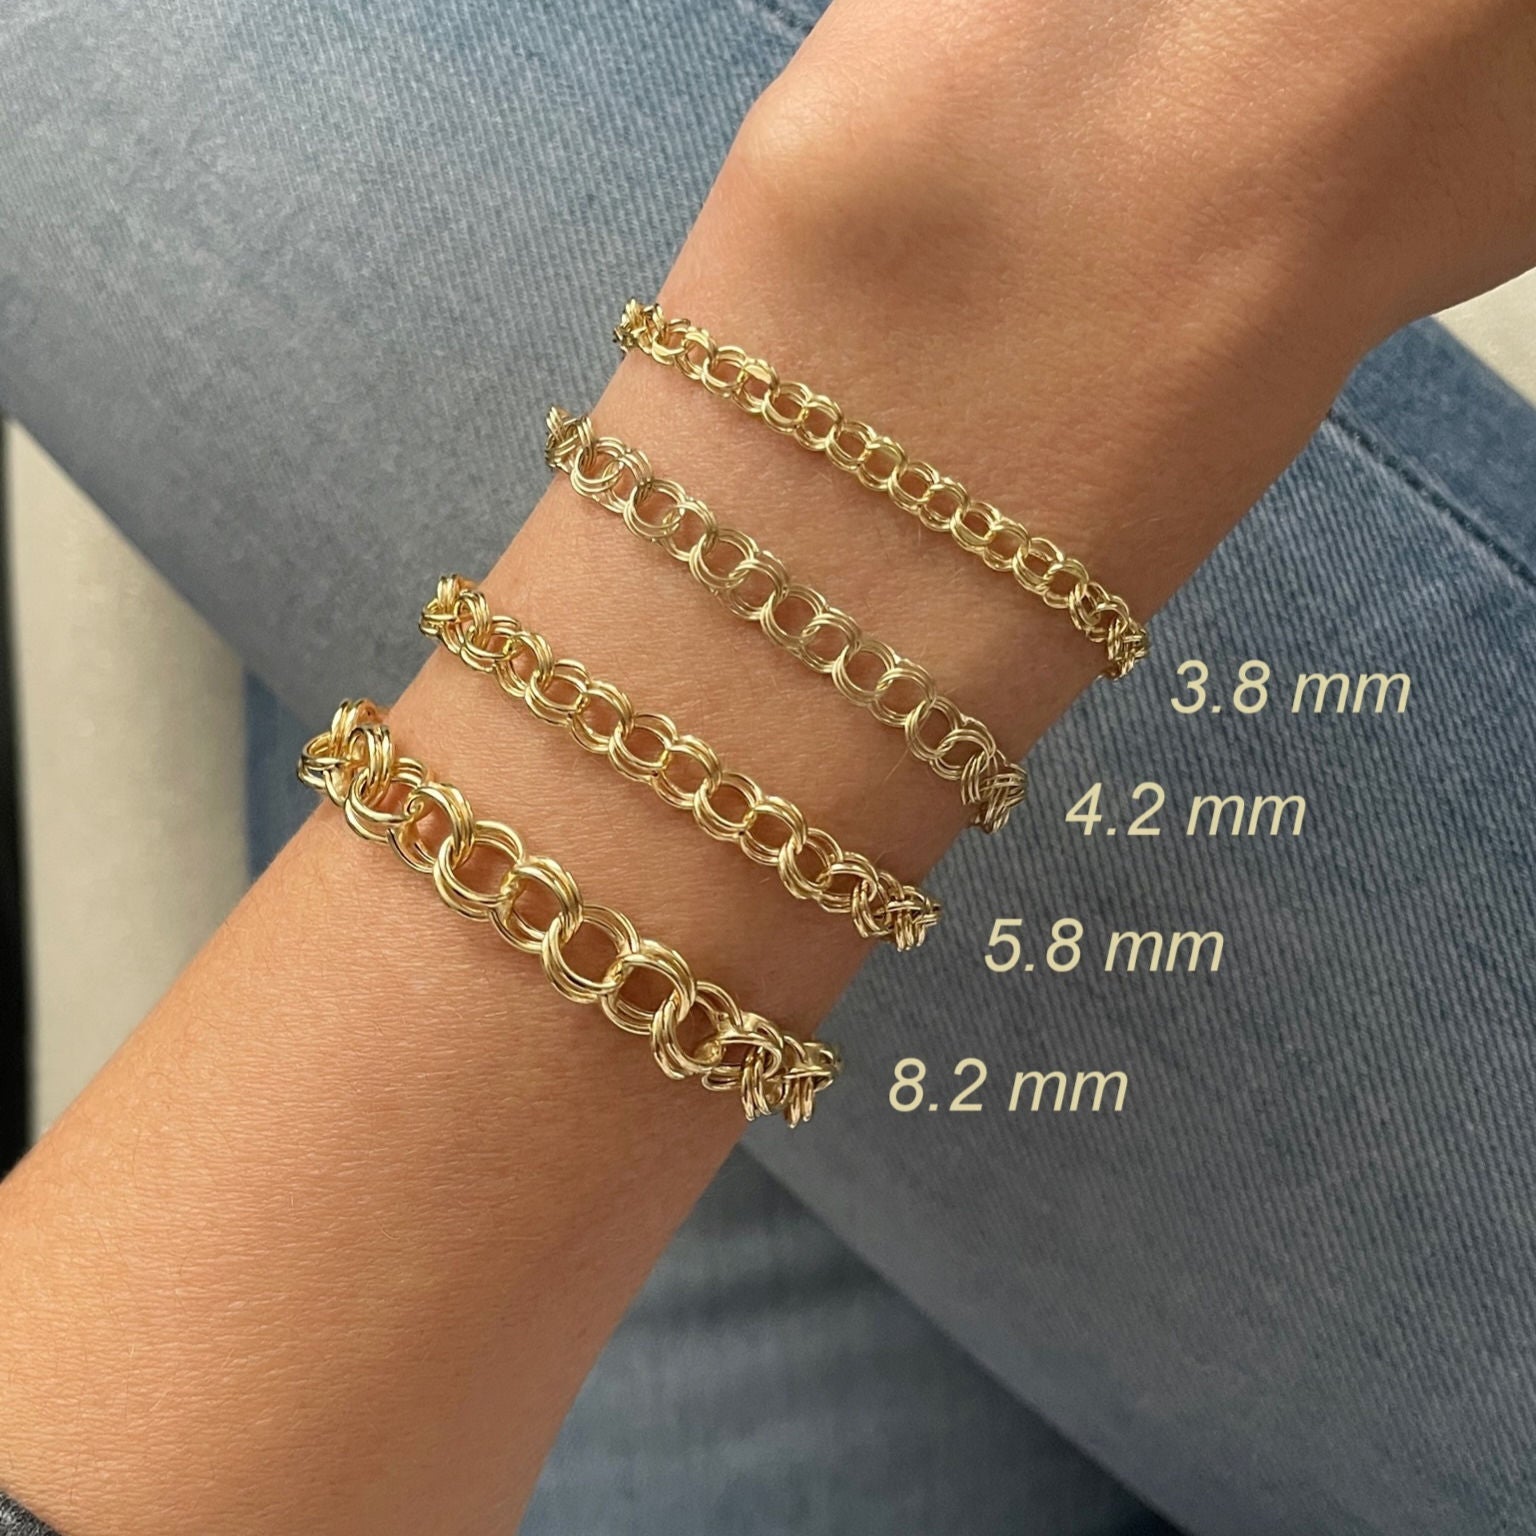 14k yellow gold charm link chain bracelet